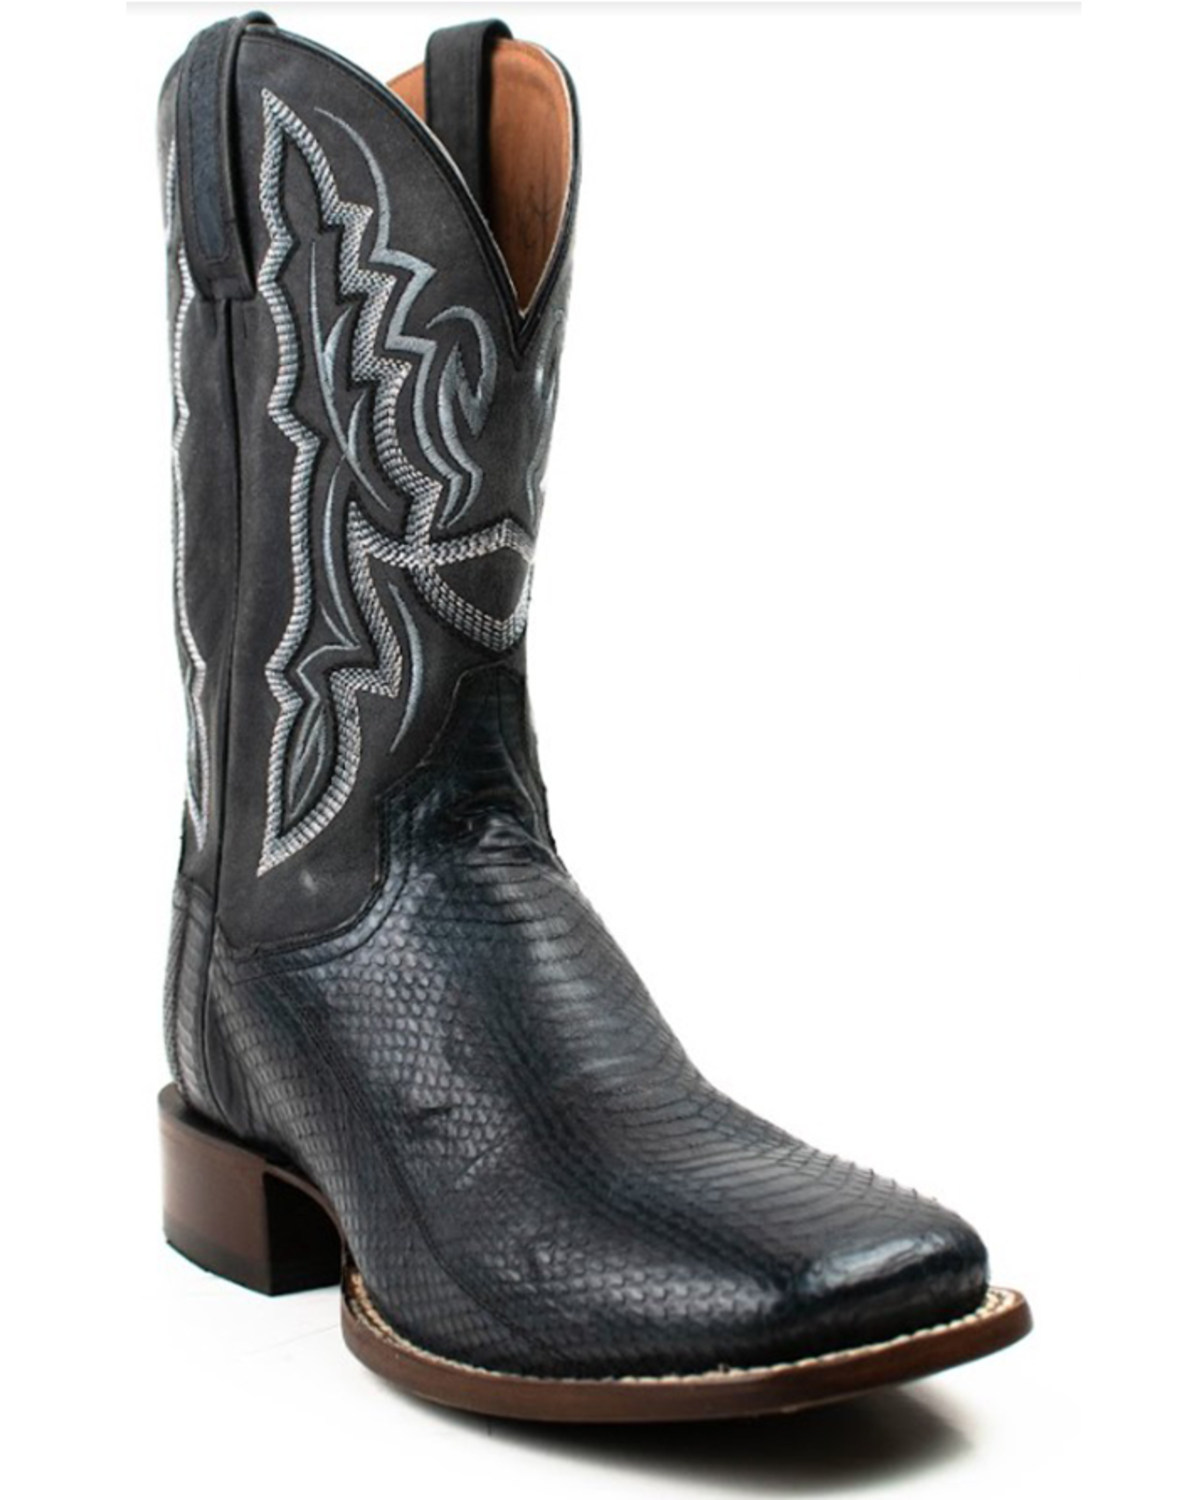 Dan Post Men's Water Snake Exotic Western Boots - Broad Square Toe